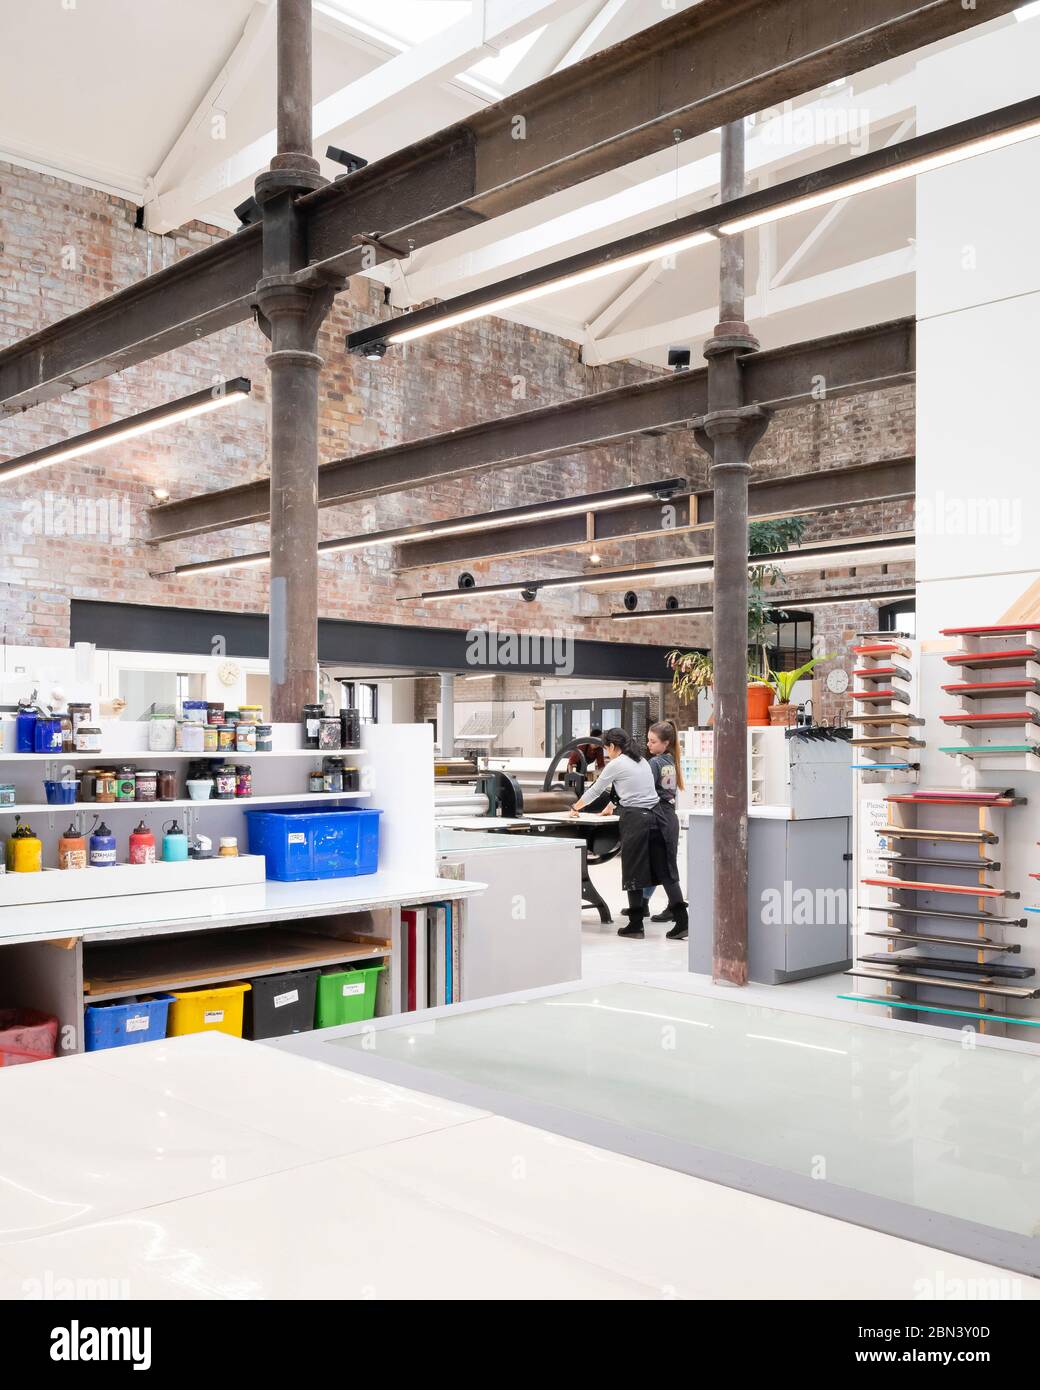 The print studio. Edinburgh Printmakers, Edinburgh, United Kingdom. Architect: Page  Park Architects, 2019. Stock Photo